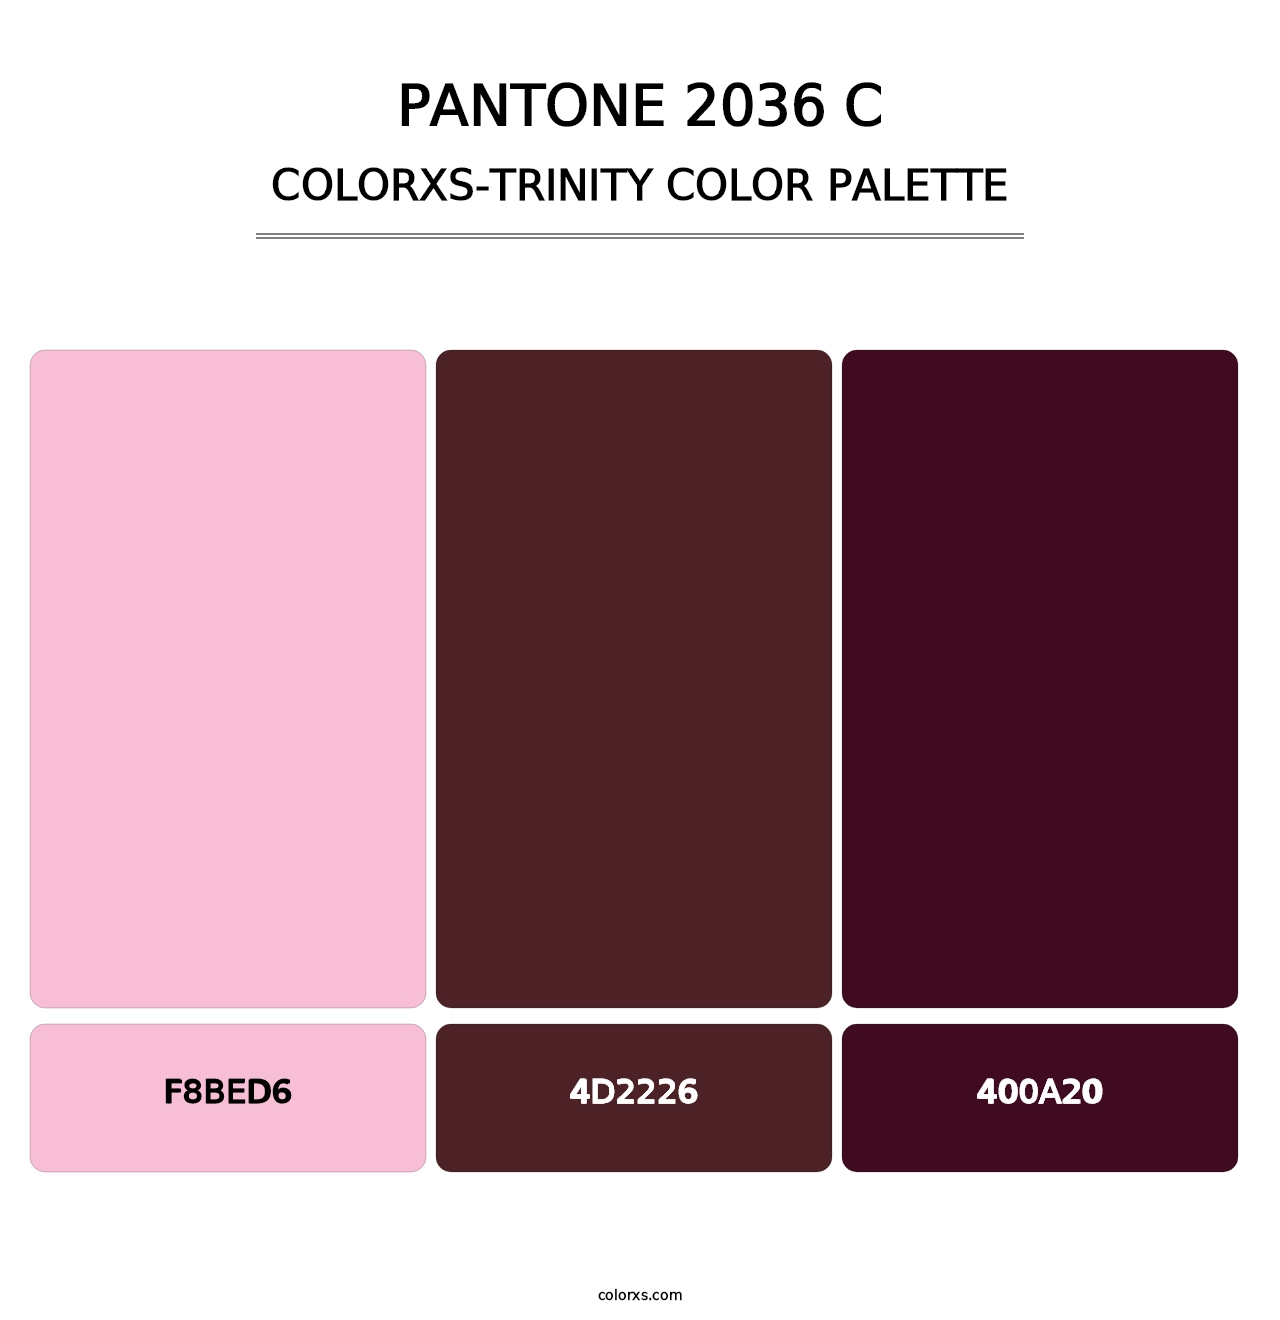 PANTONE 2036 C - Colorxs Trinity Palette